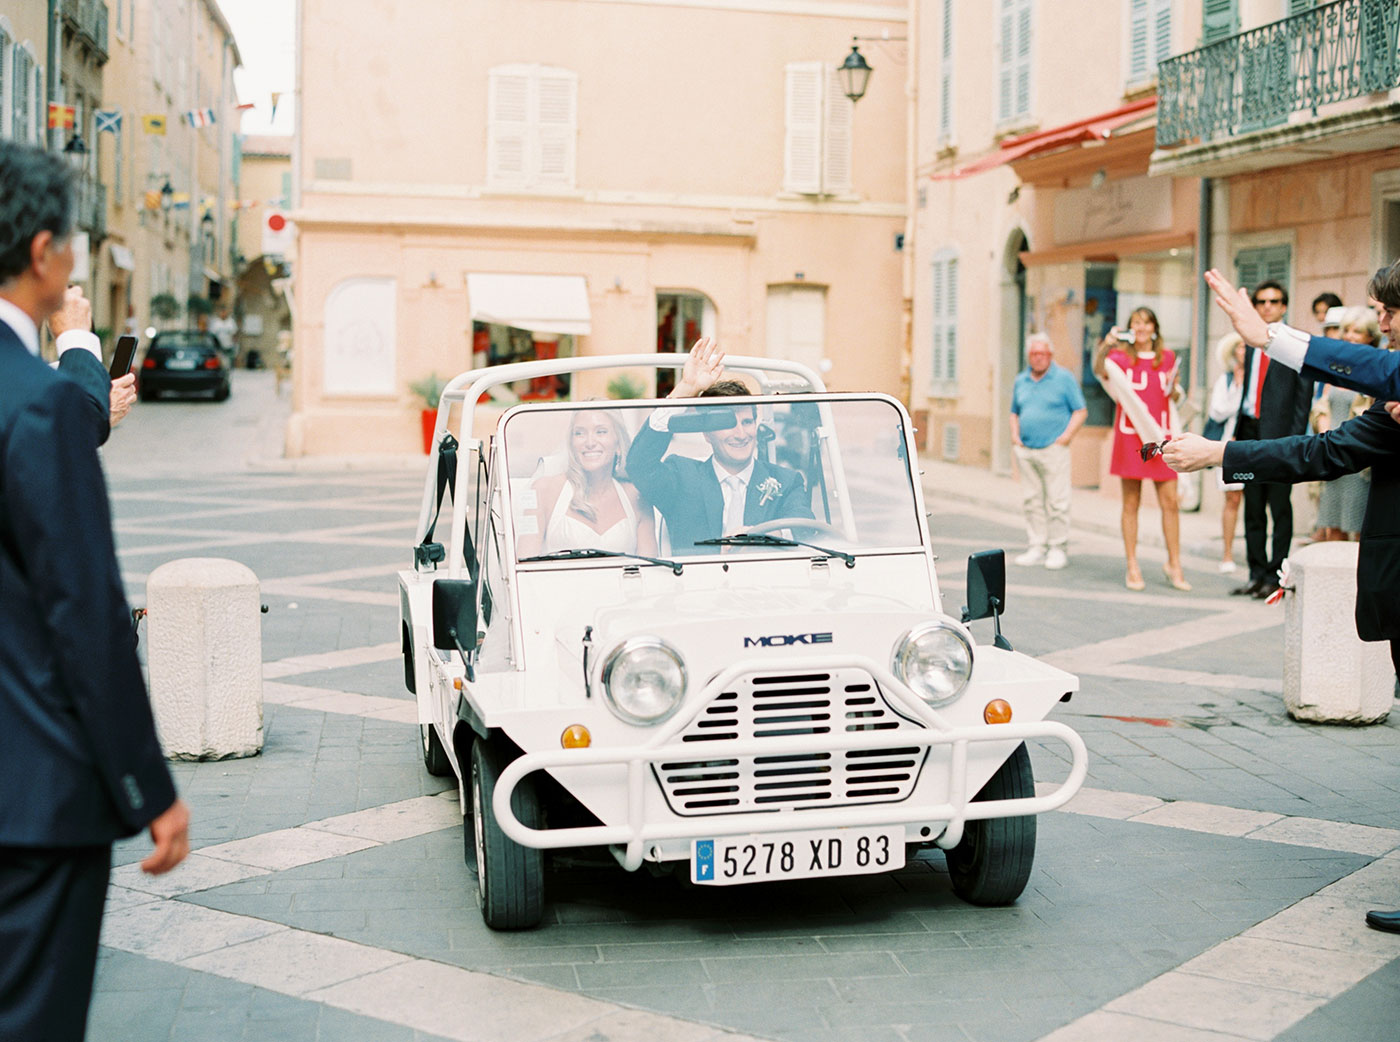 Saint Tropez Wedding Photographer French Riviera